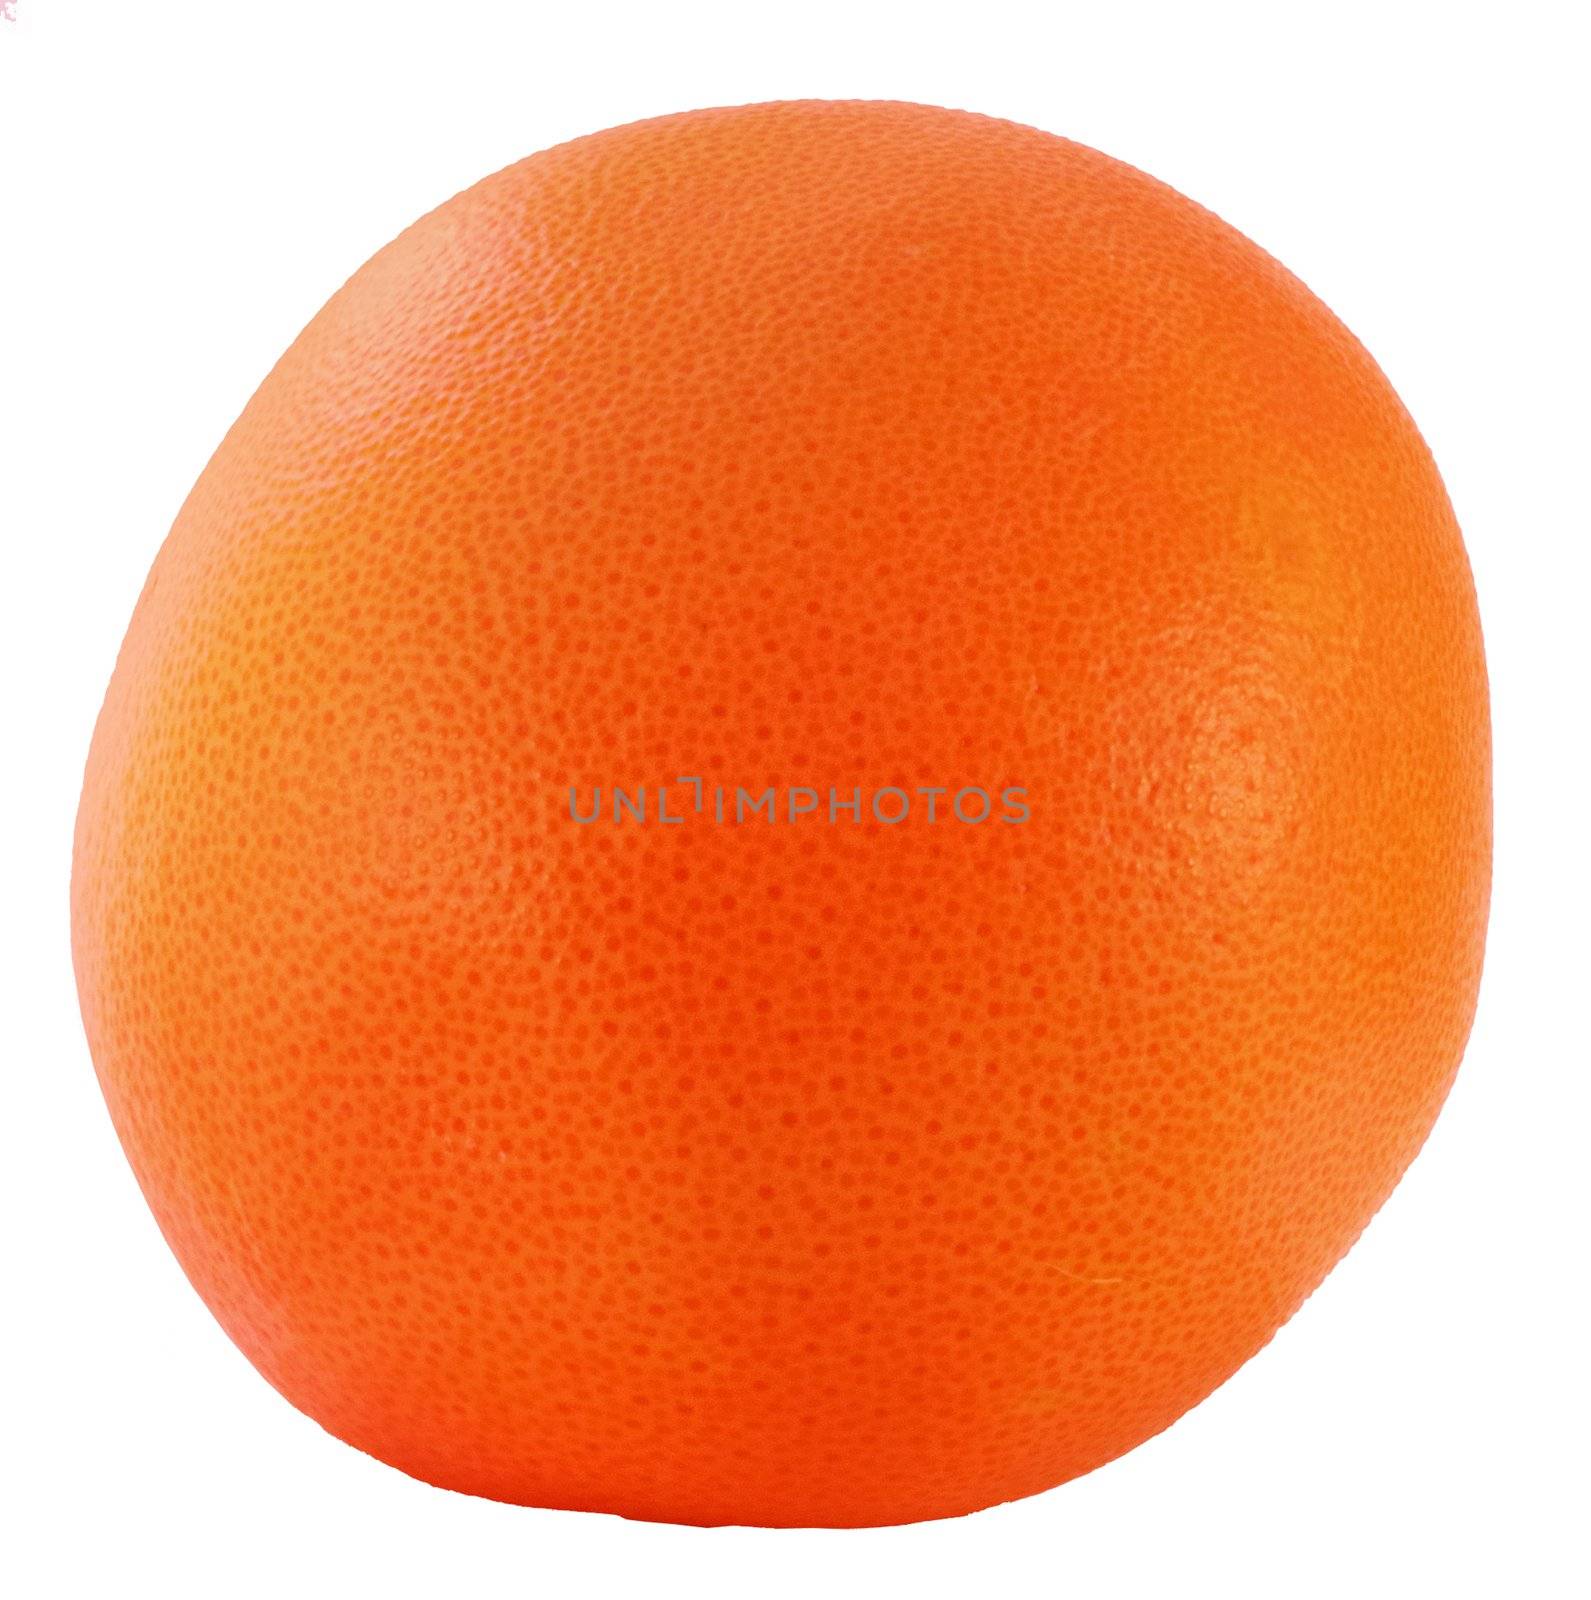 fresh grapefruit on a white background